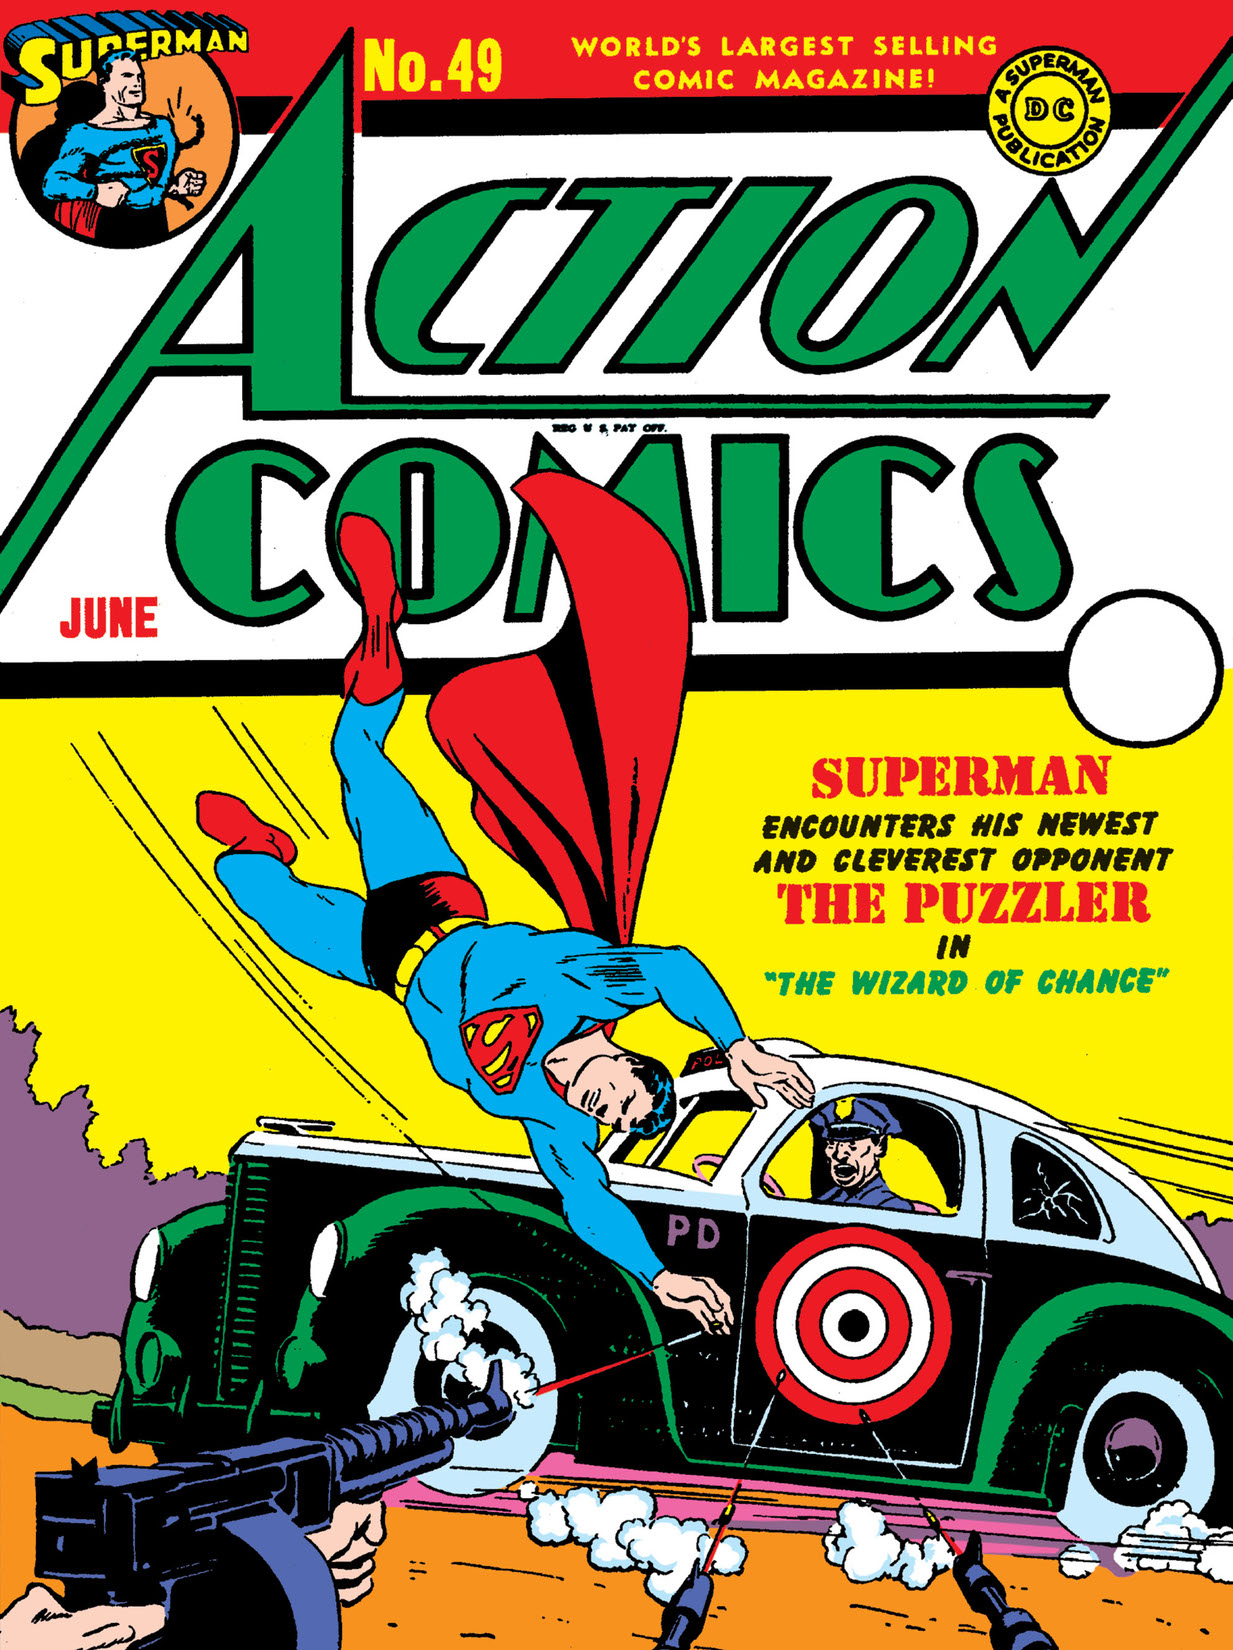 Action Comics (1938-) #49 preview images